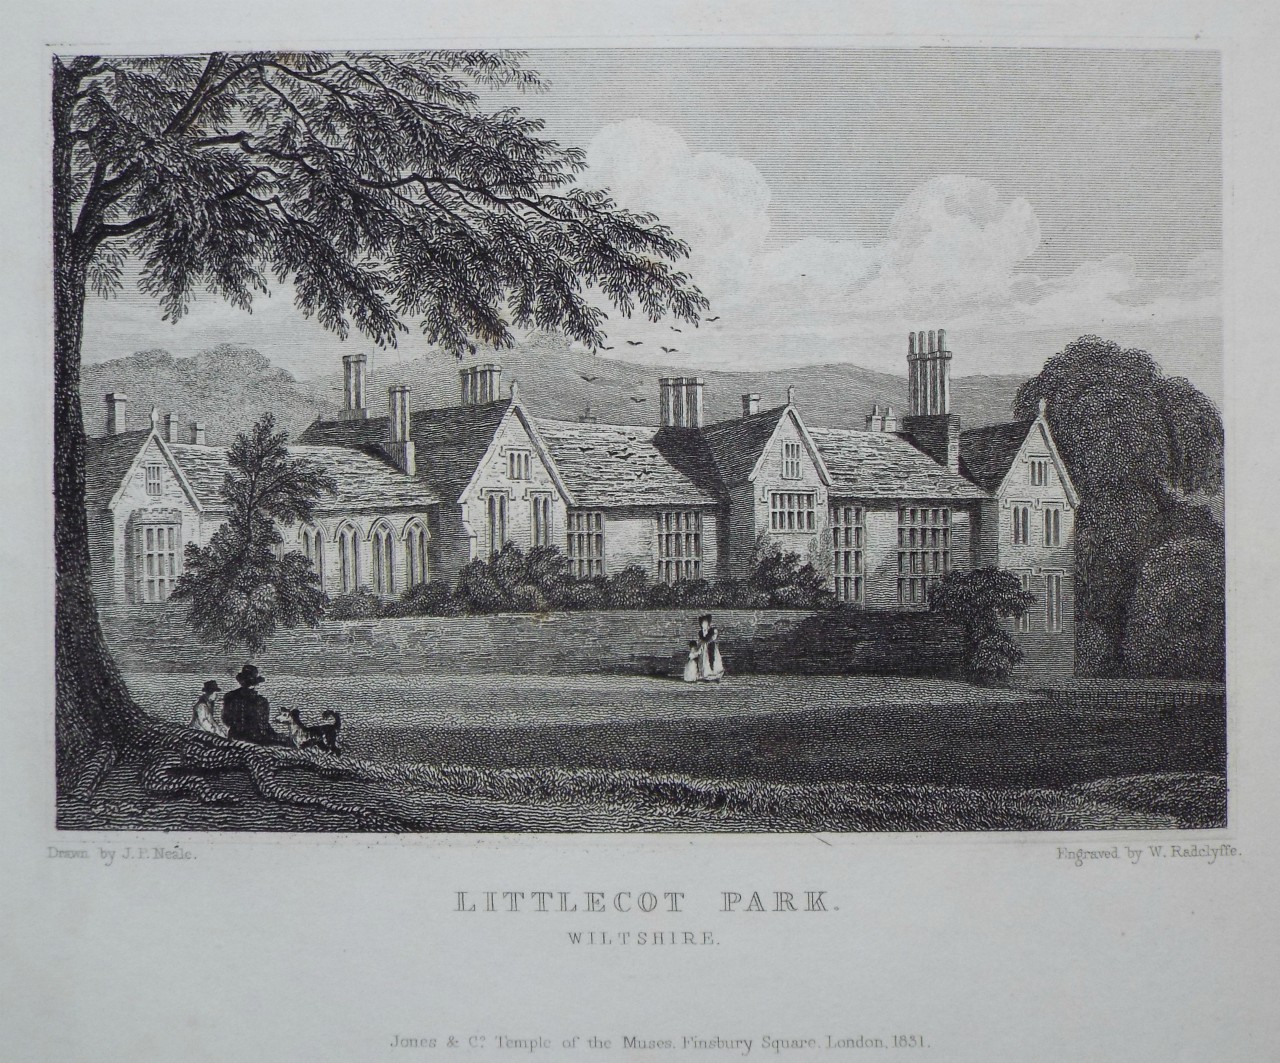 Print - Littlecote Park, Wiltshire. - Radclyffe